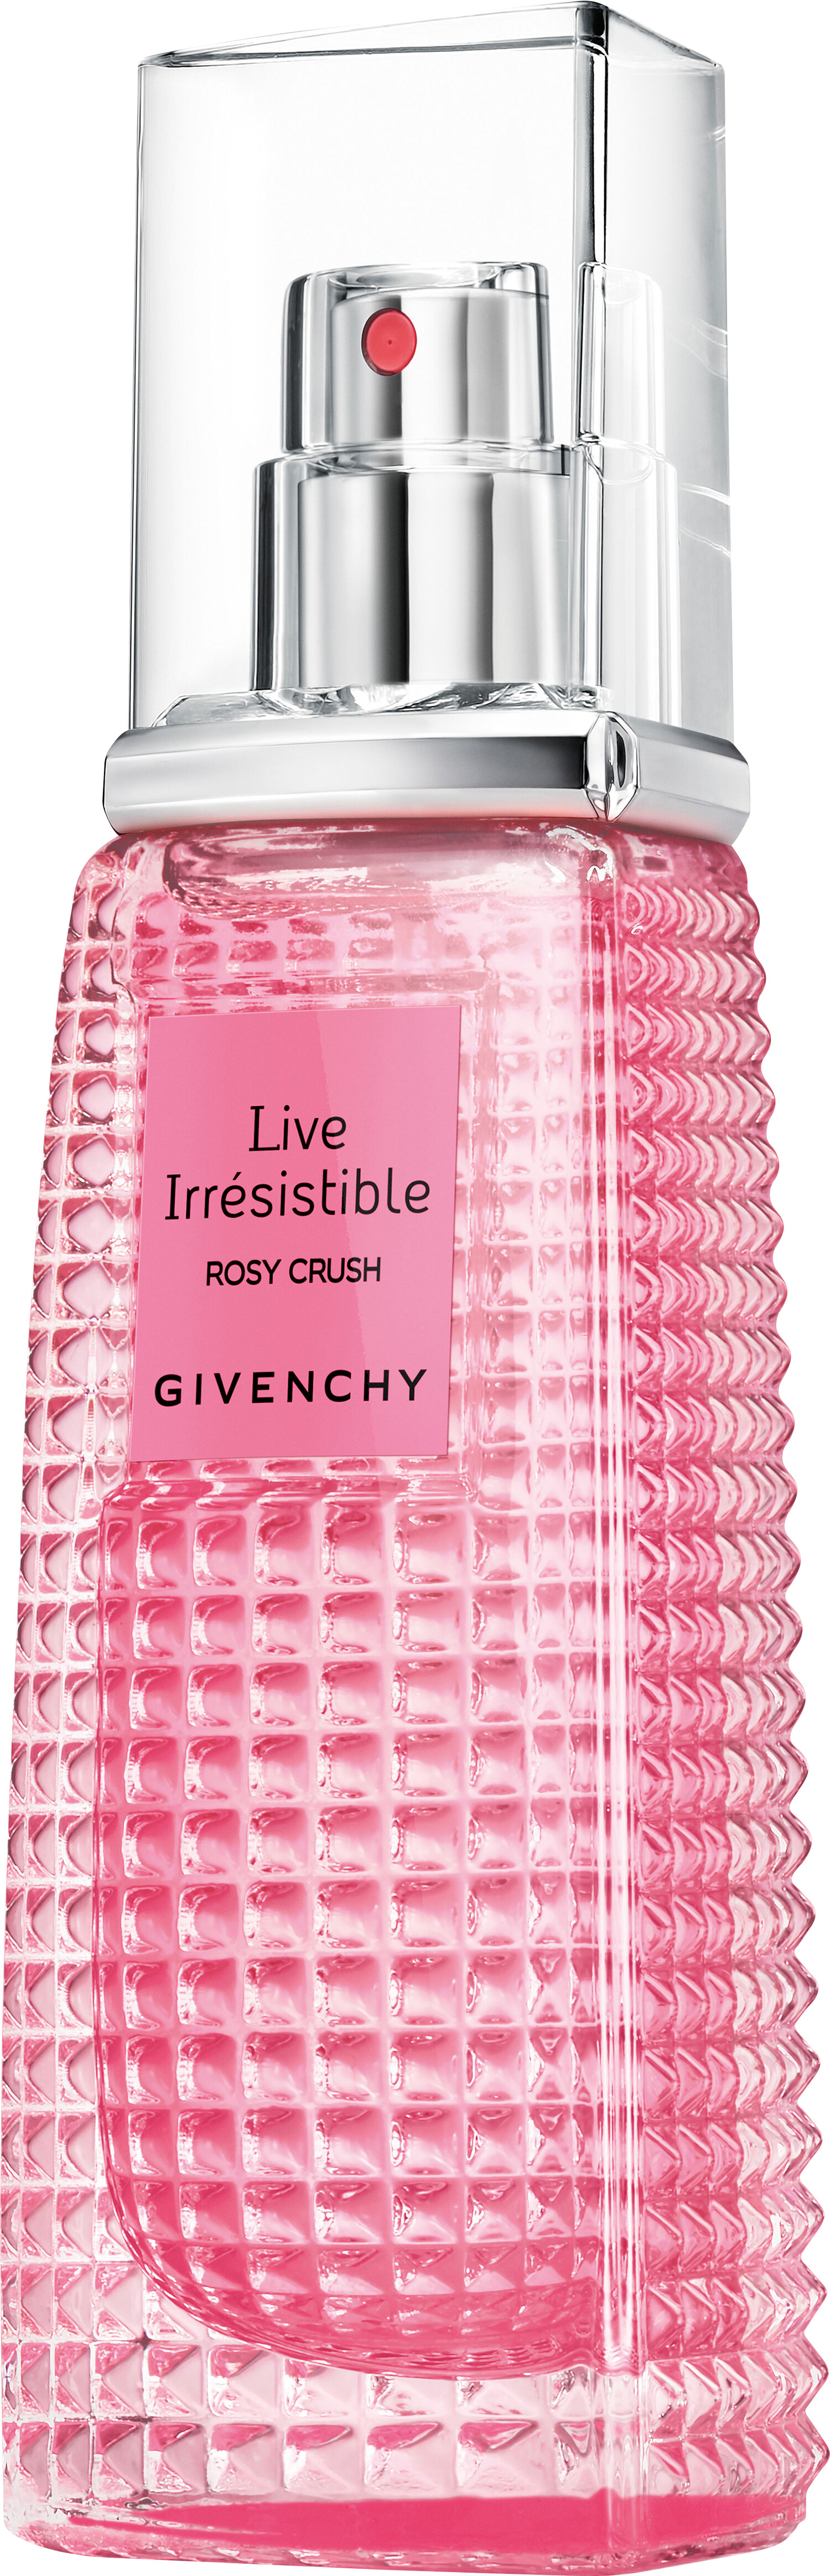 givenchy live irresistible 30ml